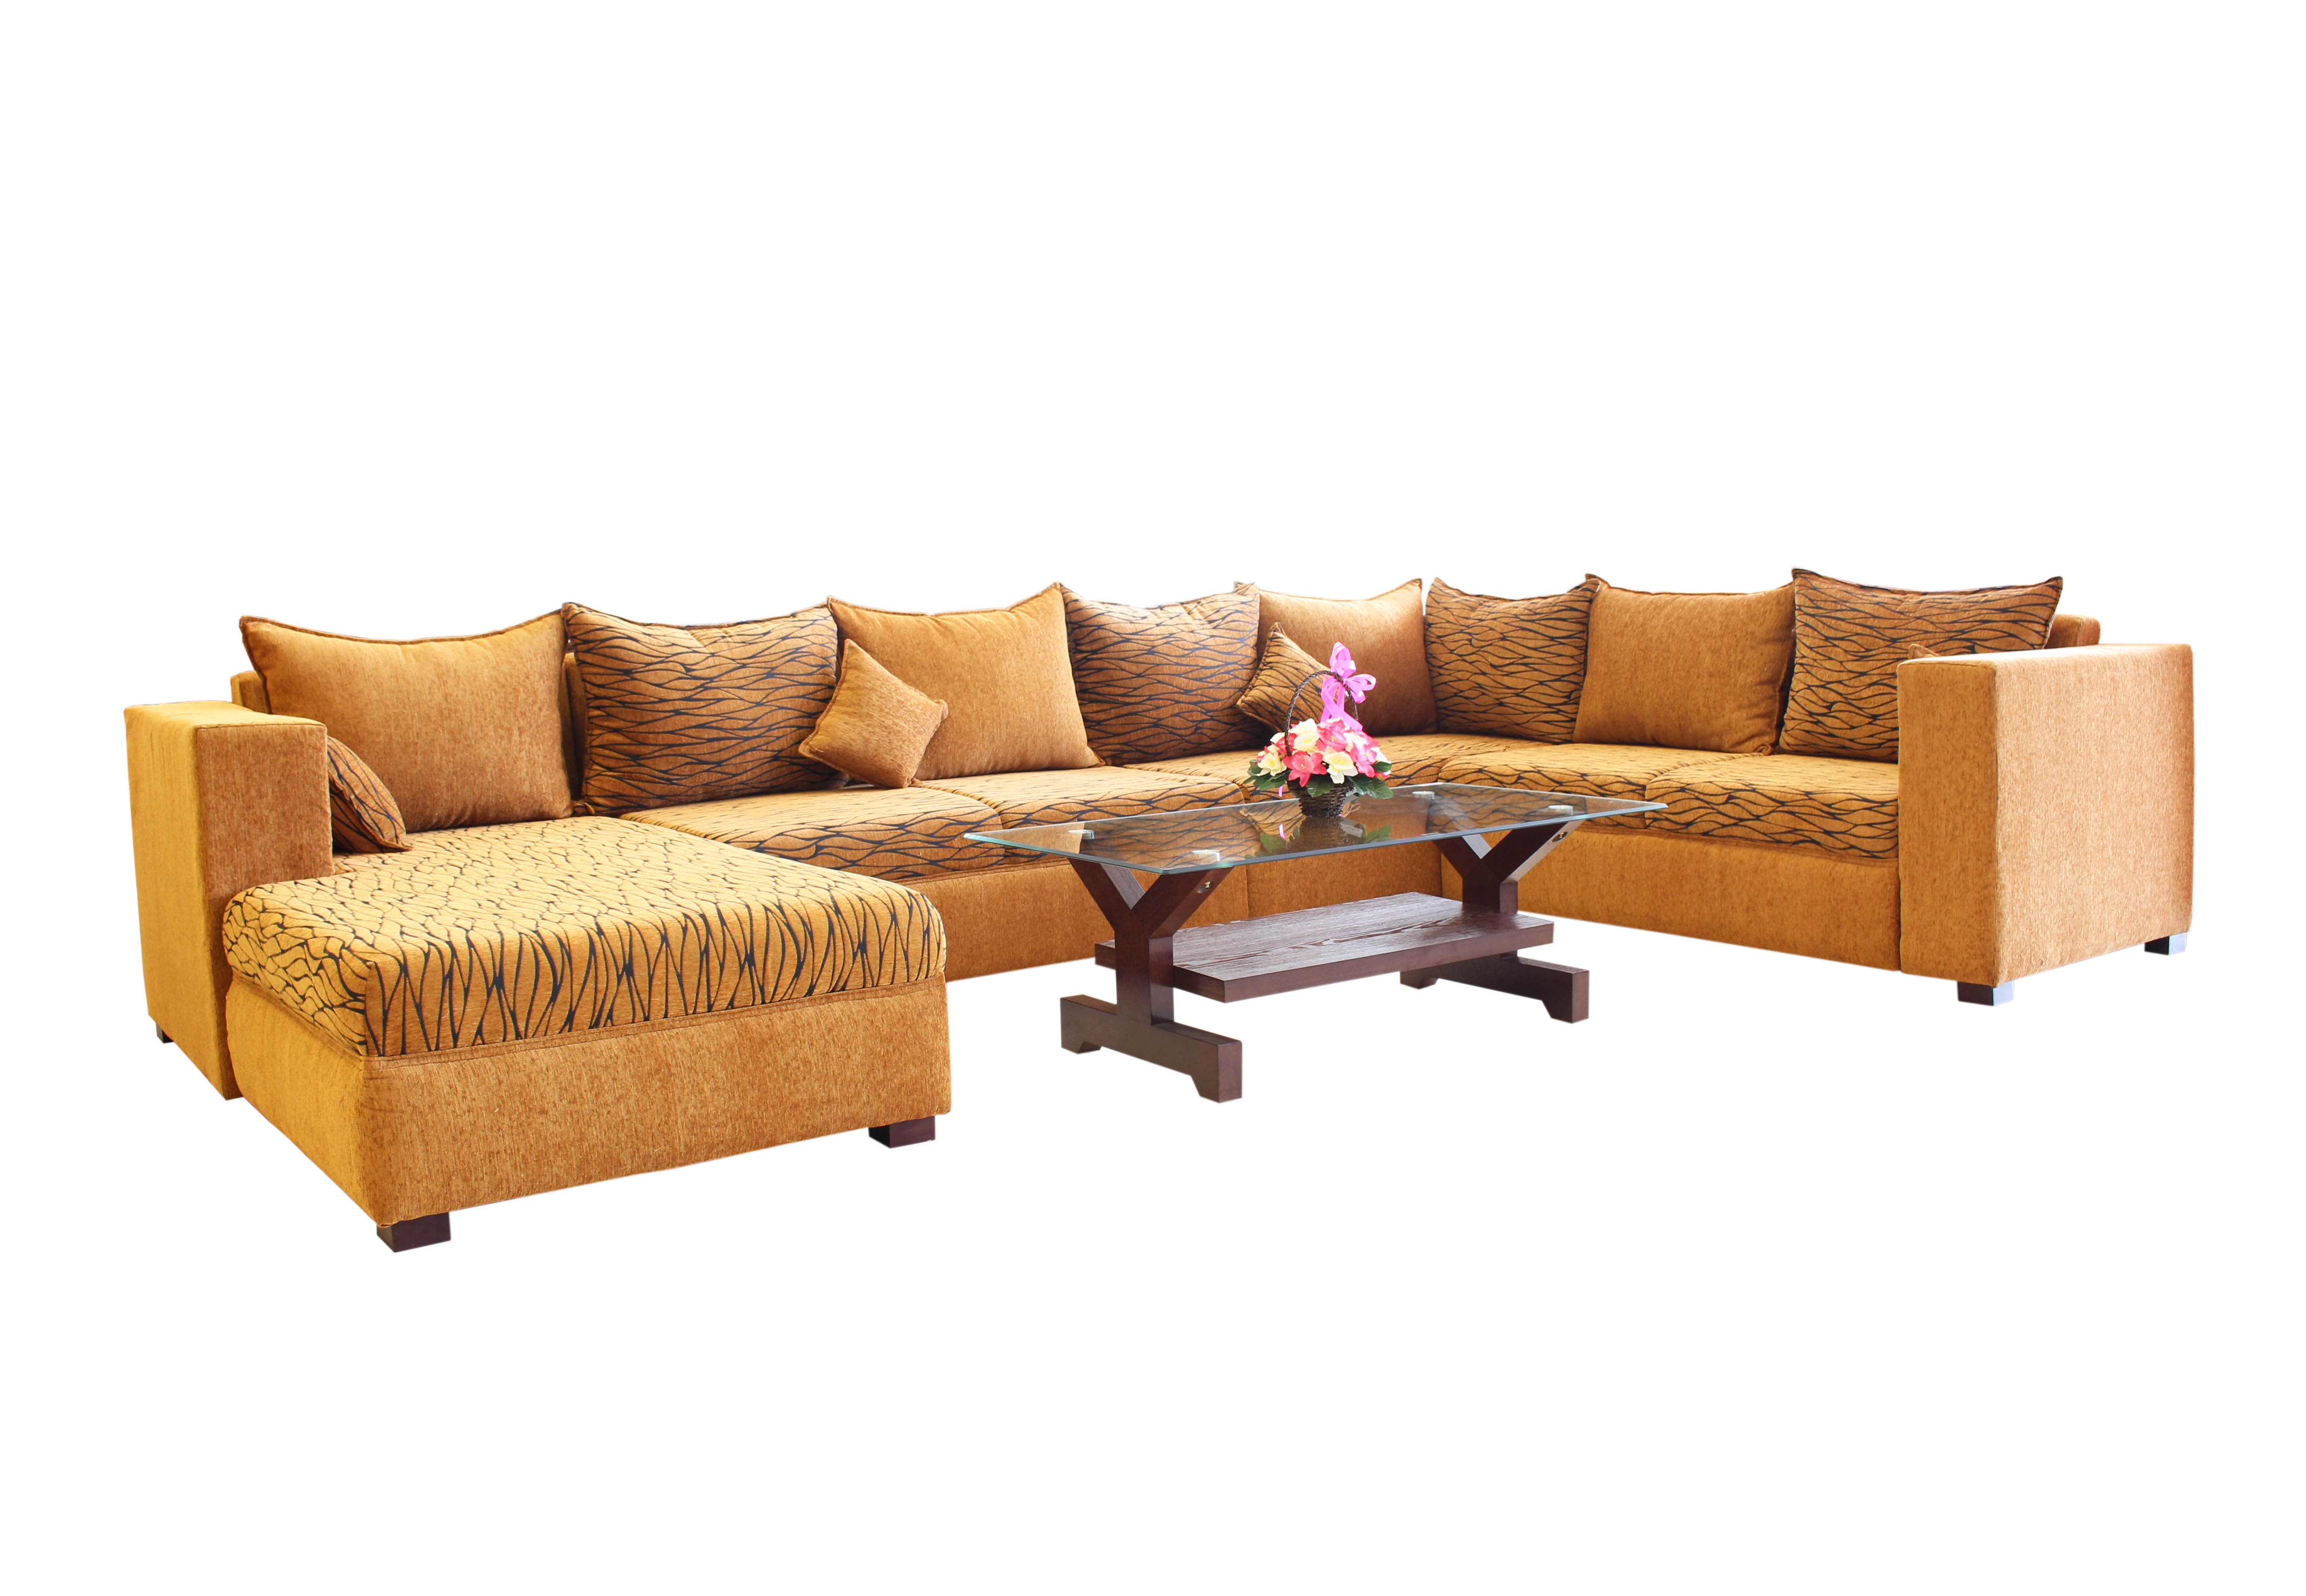  Arpico  Furniture  Price For Sale Sri  Lanka  Lankabuysell com 